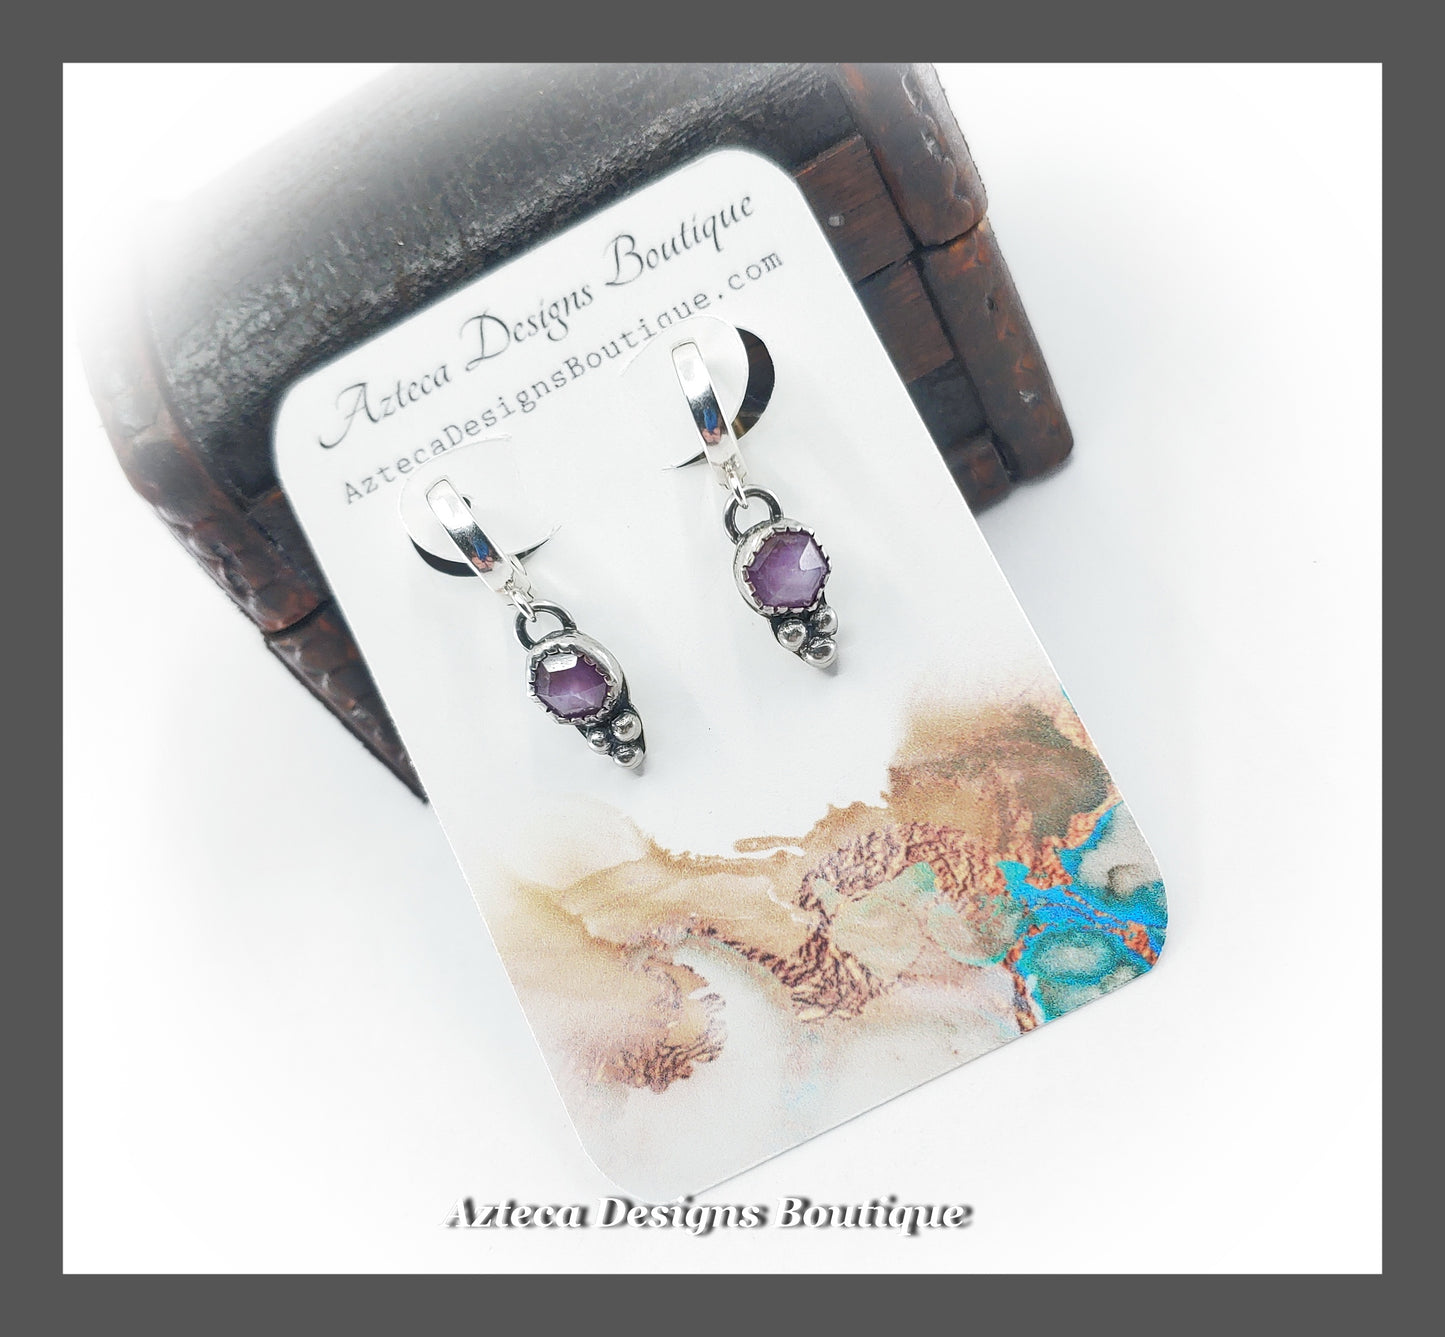 Dainty Purple Silk Sapphire Faceted Gemstone + Hand Fabricated Sterling Silver + Huggie Latch Hoop Earrings